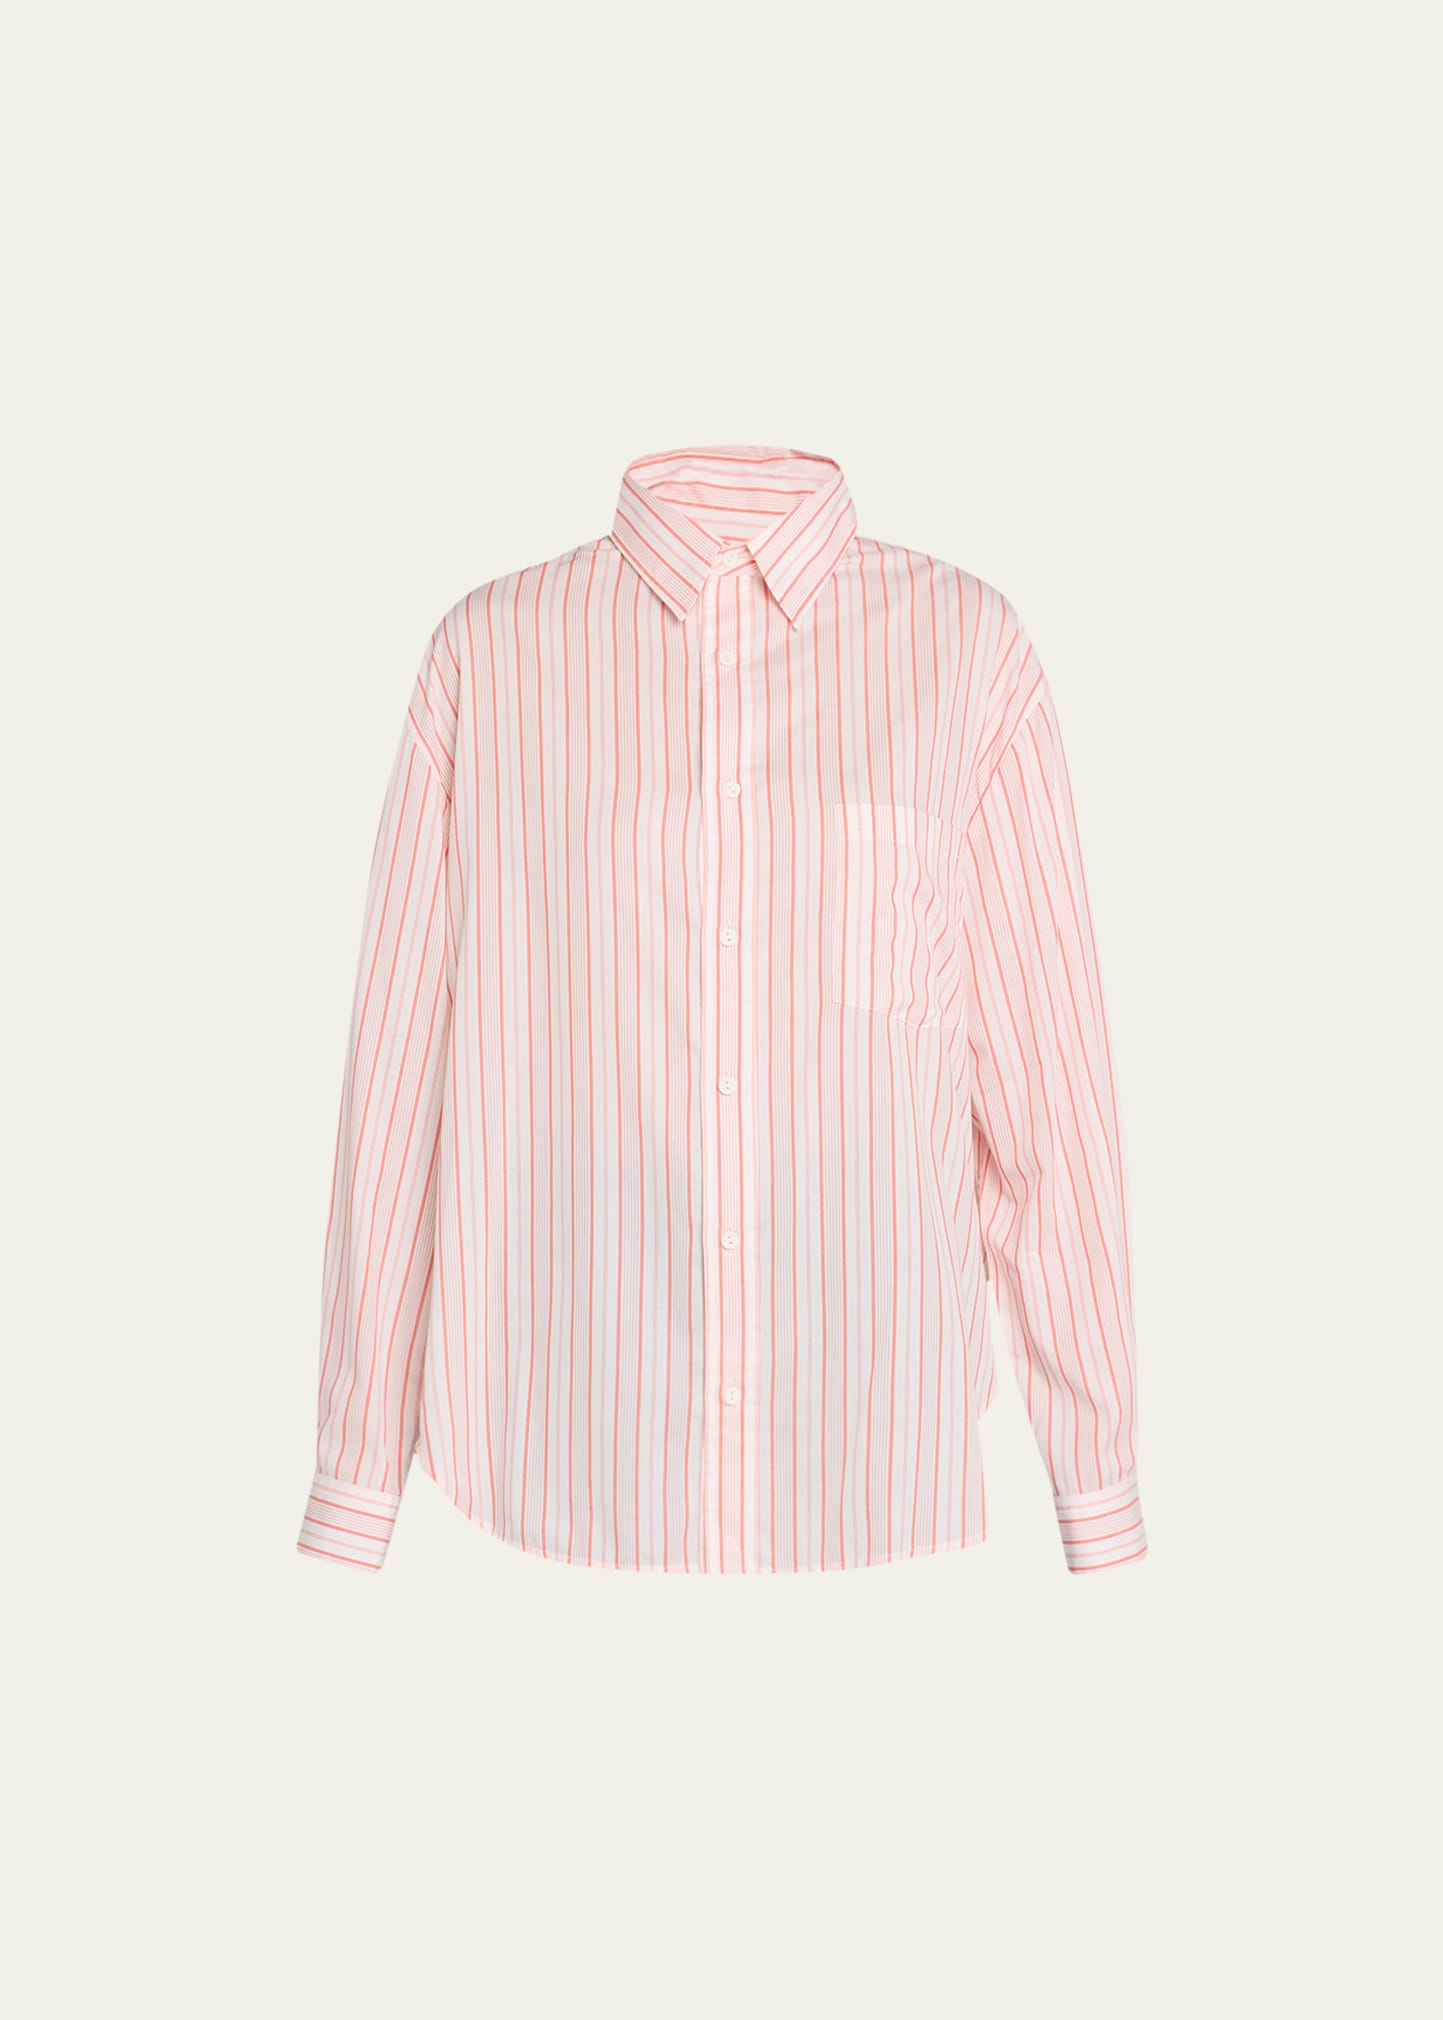 Matteau Soft Classic Striped Shirt In Tangelo